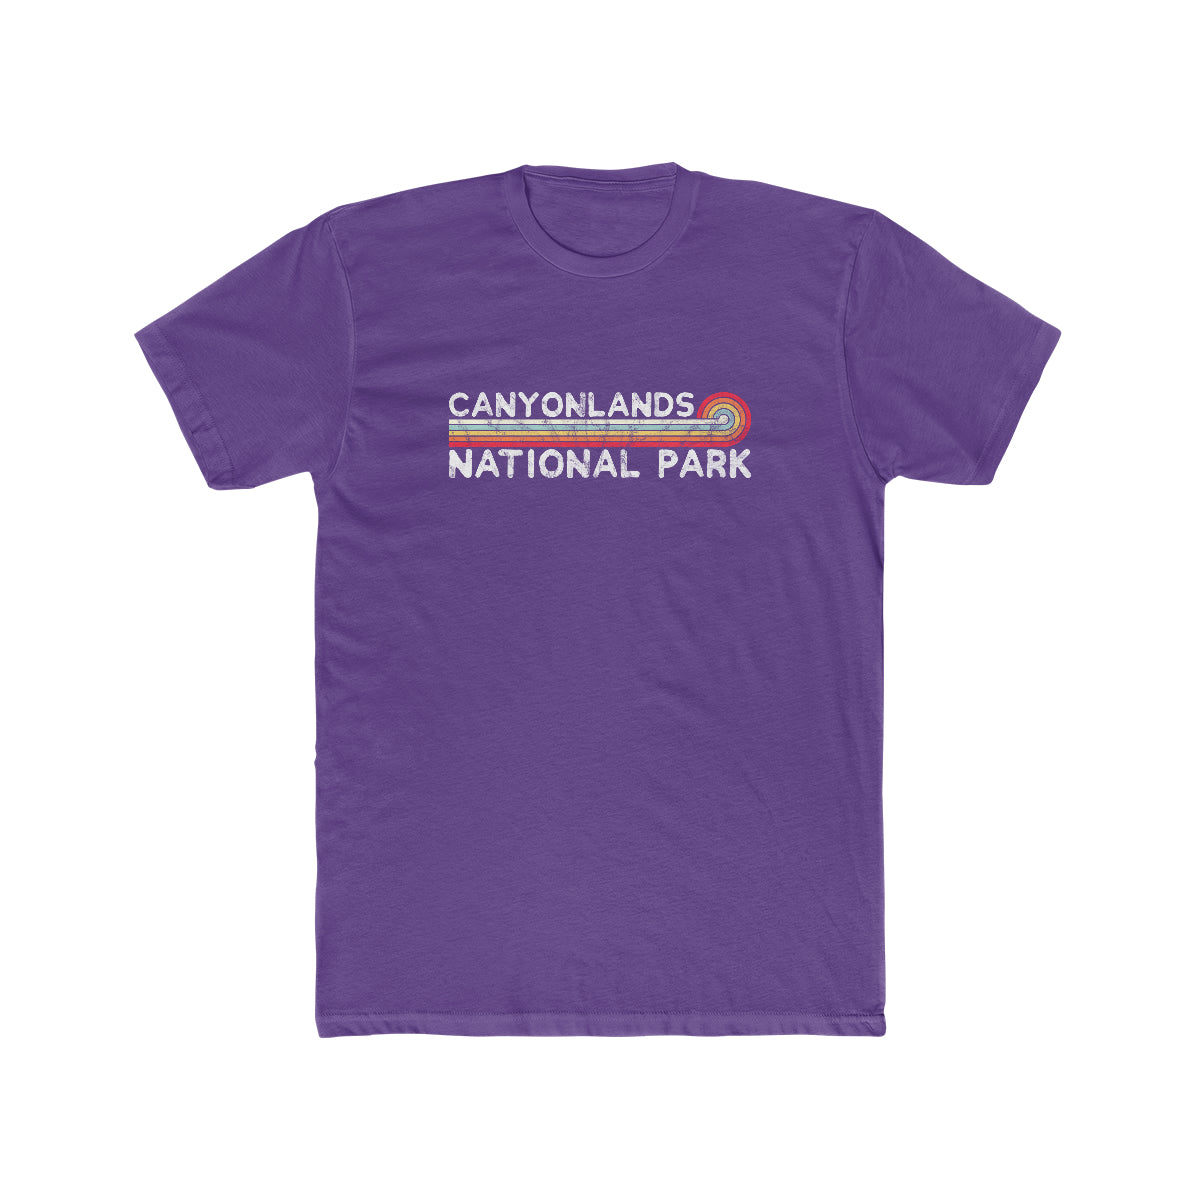 Canyonlands National Park T-Shirt - Vintage Stretched Sunrise